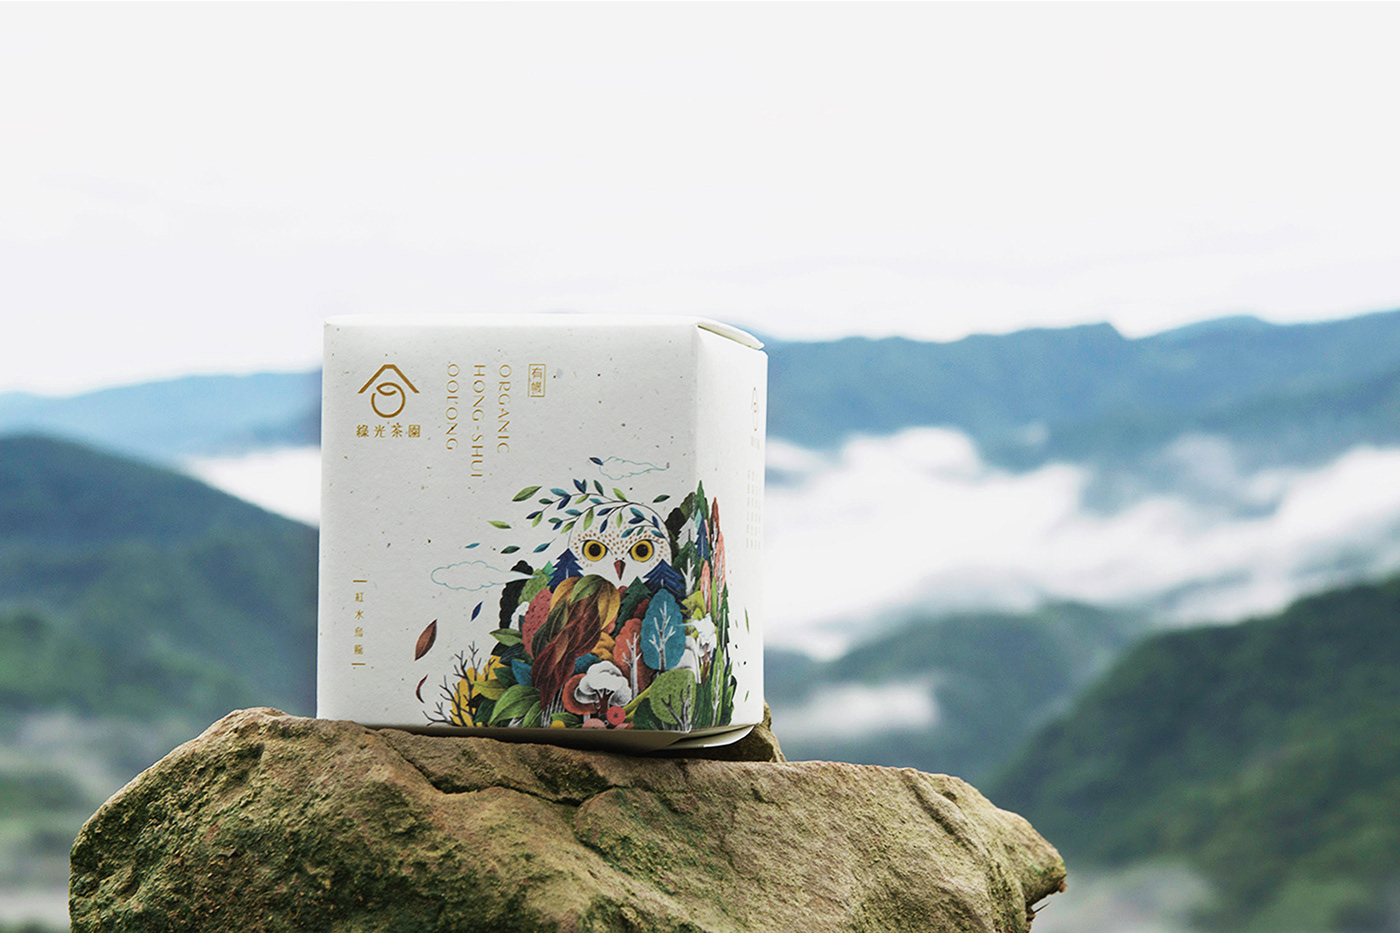 Eco-friendly organic tea Green Light Tea Garden onebook design 綠光茶園-環保有機茶 中國包裝之星 金點設計獎 MUSE DESIGN AWARDS a design awards 2021 TAIWAN TOP STAR 中華設計獎